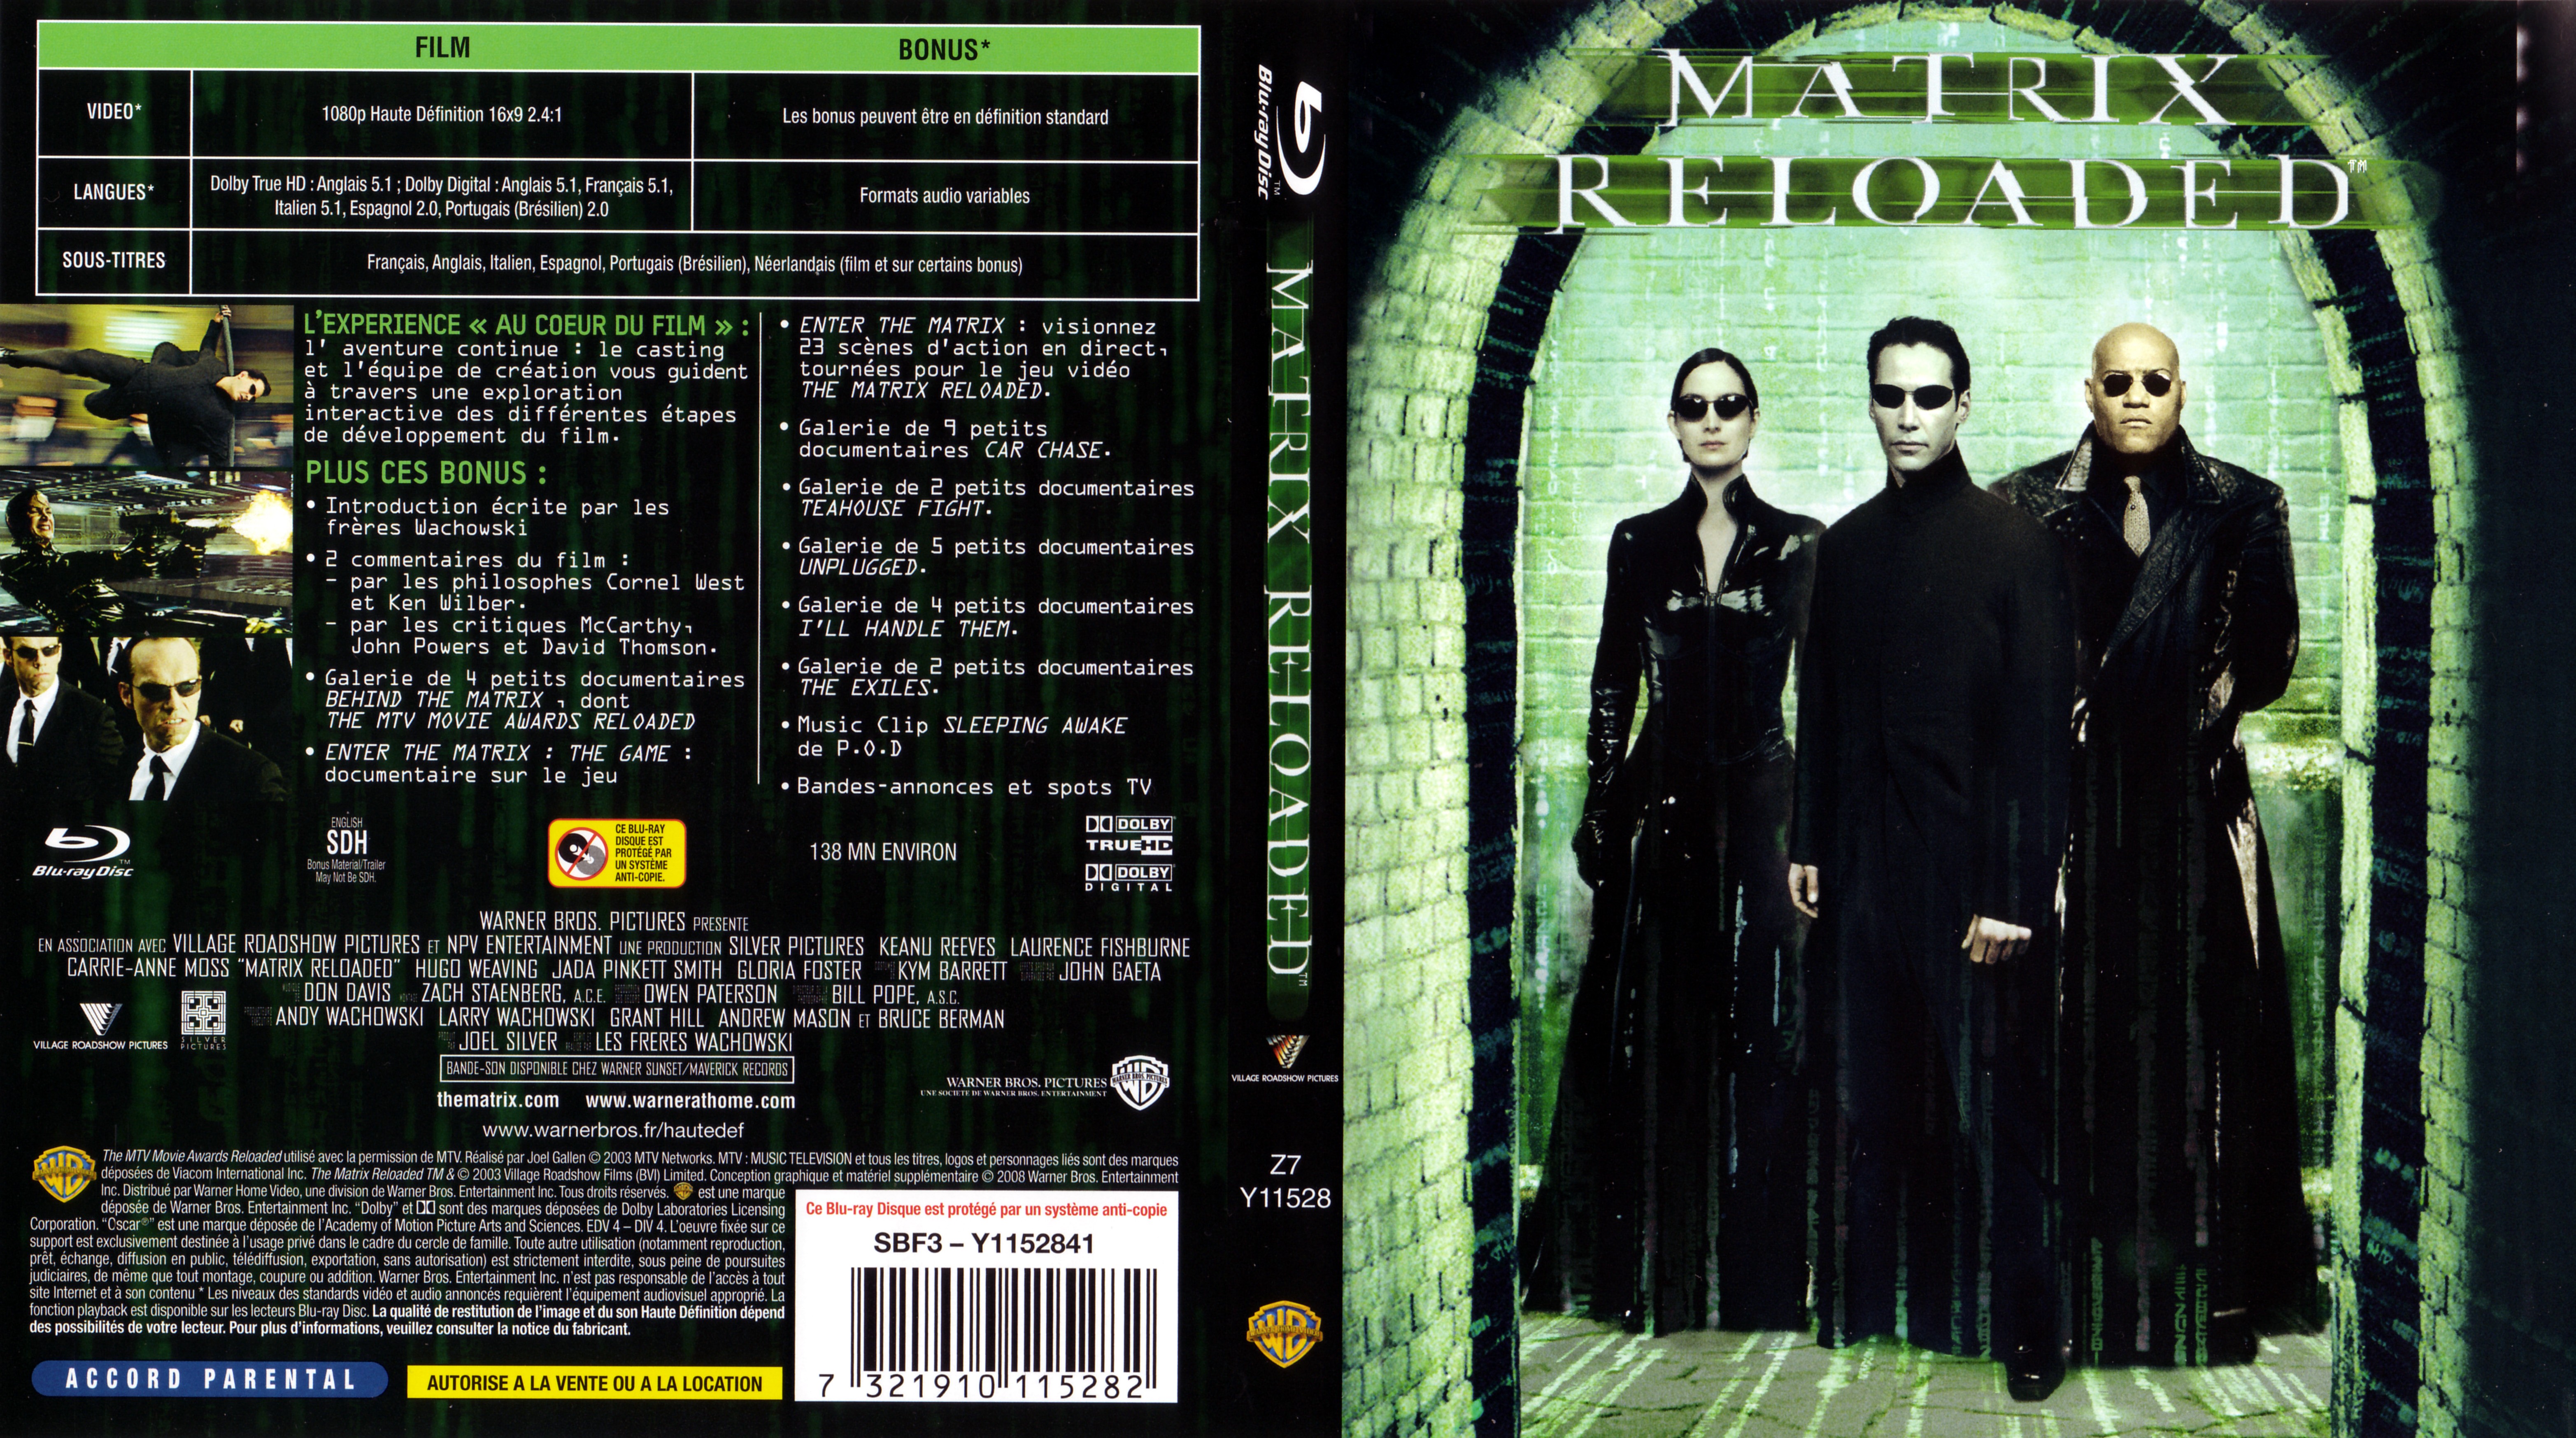 Jaquette DVD Matrix reloaded (BLU-RAY)